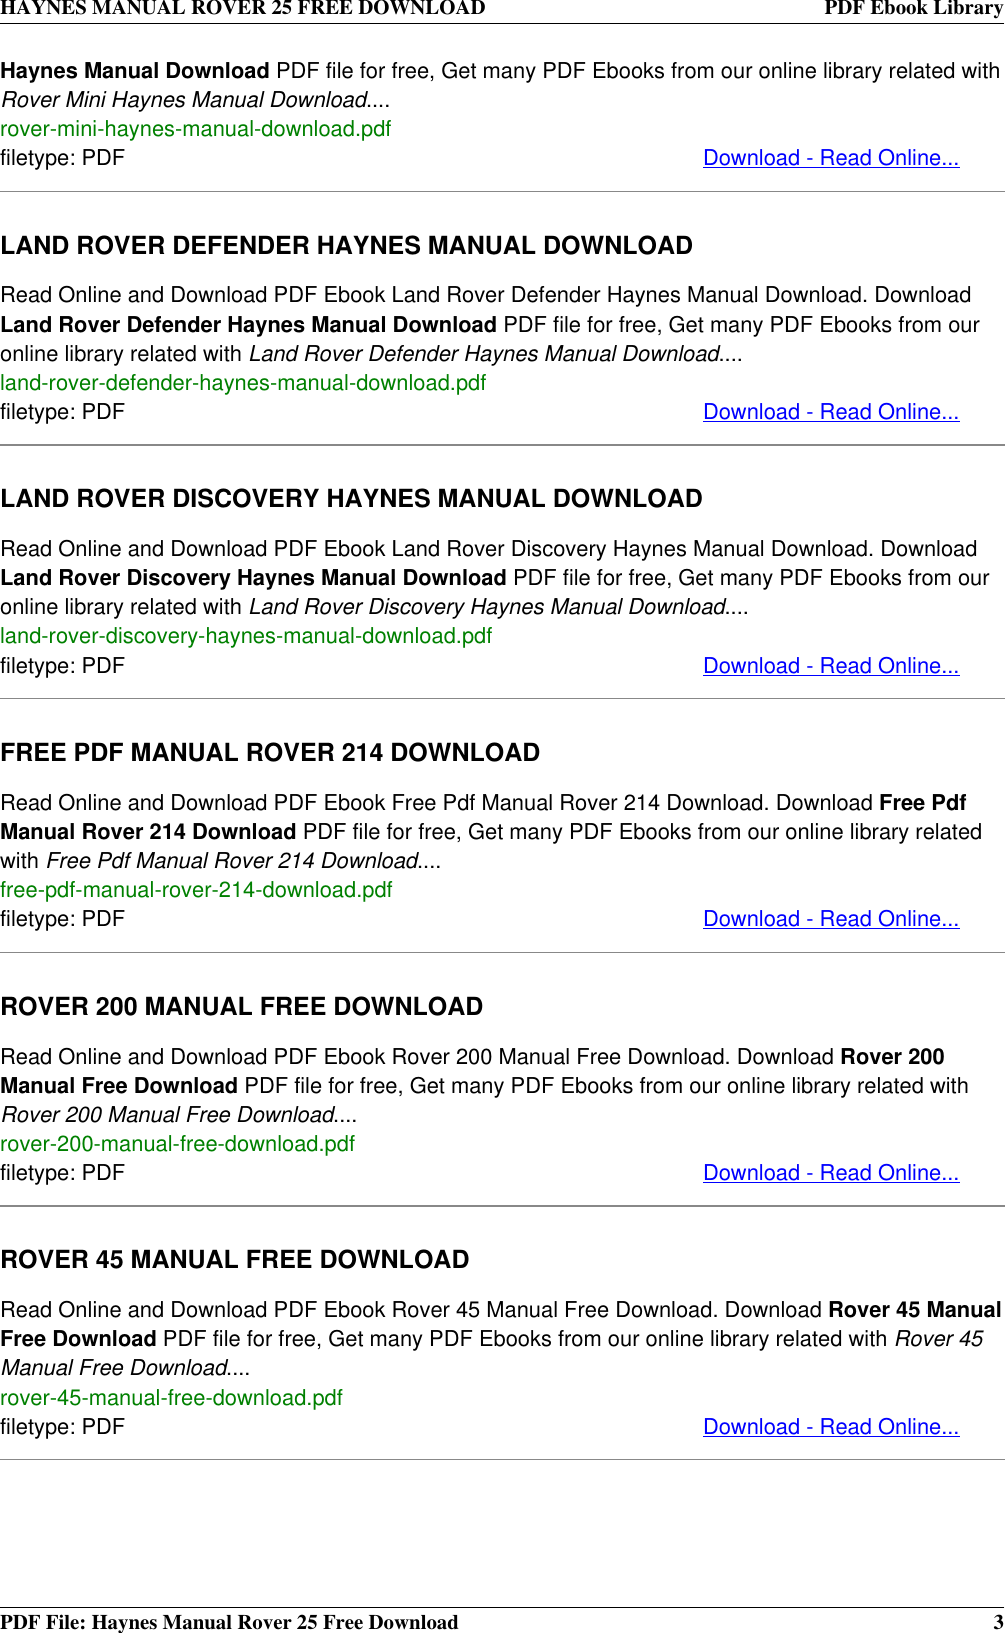 Page 3 of 4 - Haynes-Manuals Haynes-Manuals-Haynes-Manuals-Automobile-25-Users-Manual- HAYNES MANUAL ROVER 25  Haynes-manuals-haynes-manuals-automobile-25-users-manual